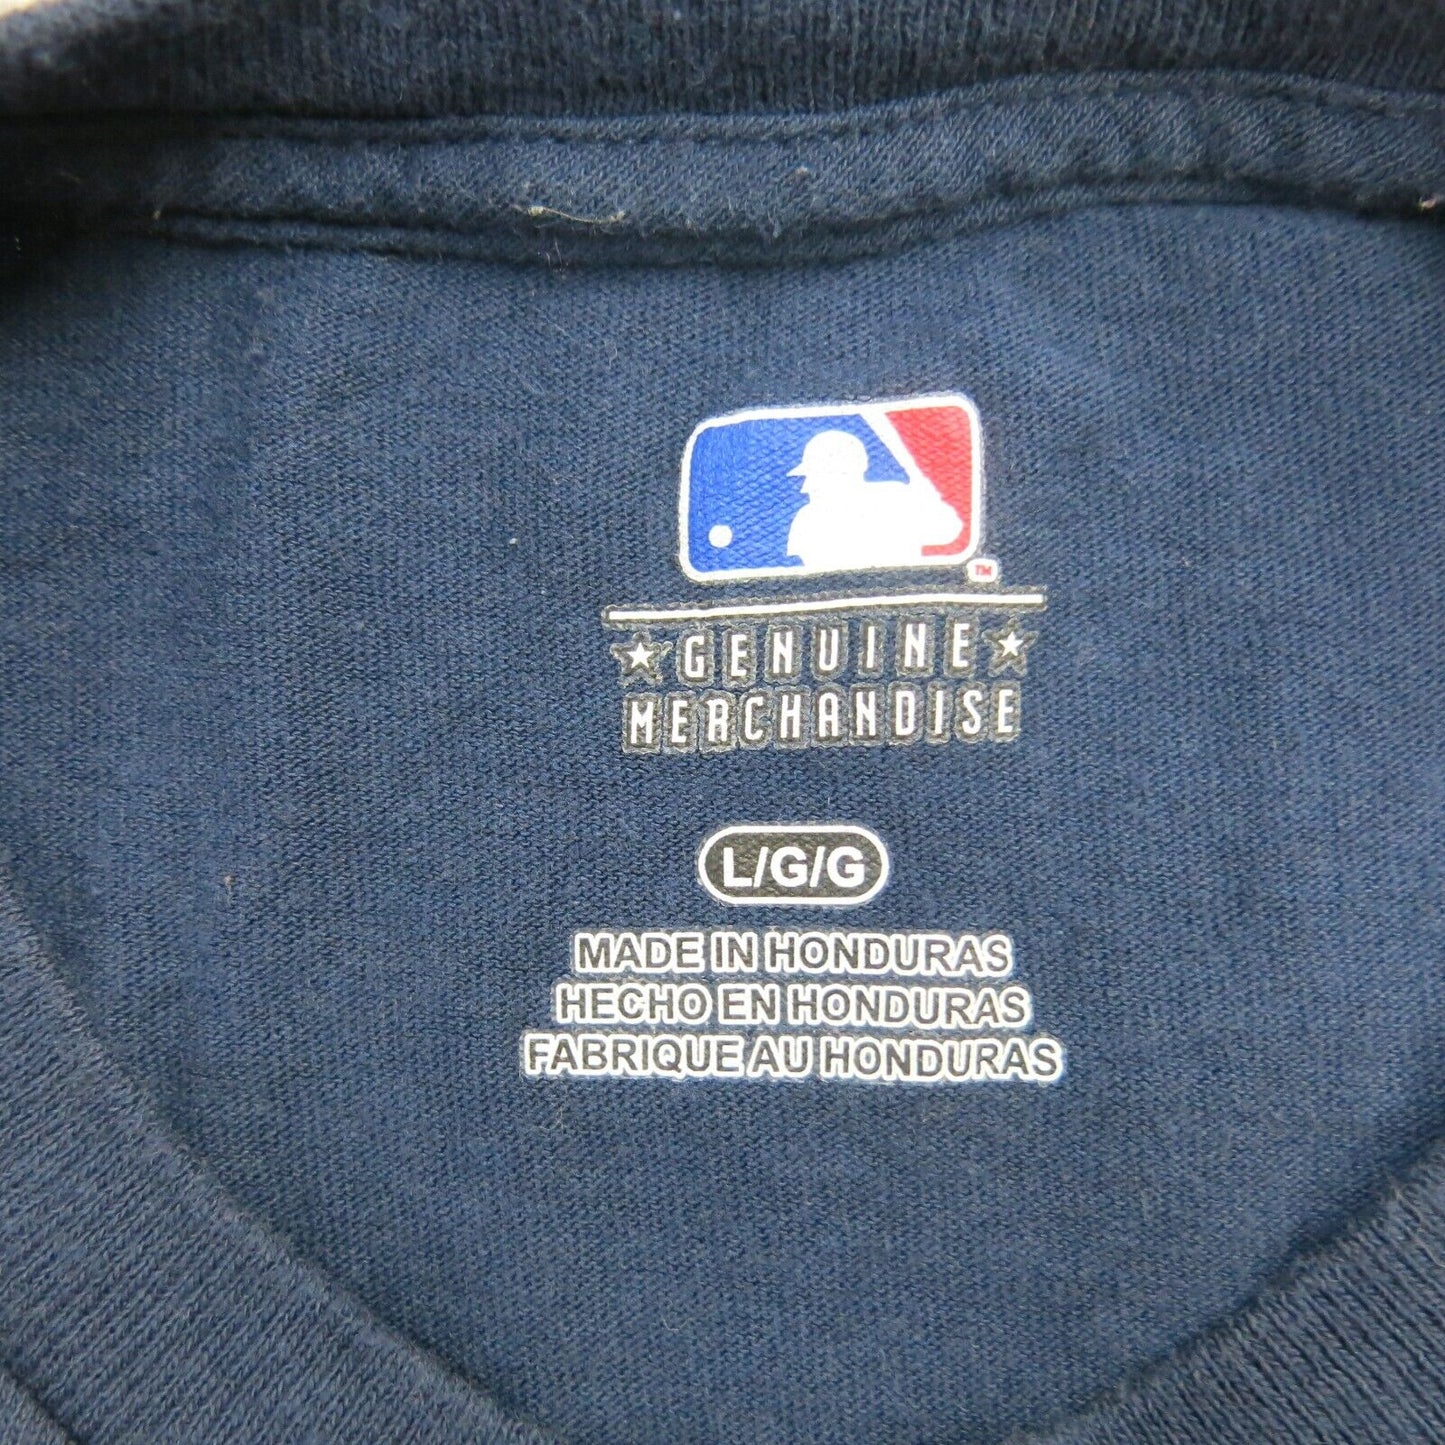 Genuine Merchandise Shirt Mens Large Blue MLB Minnesota Twins Crew Neck Tee